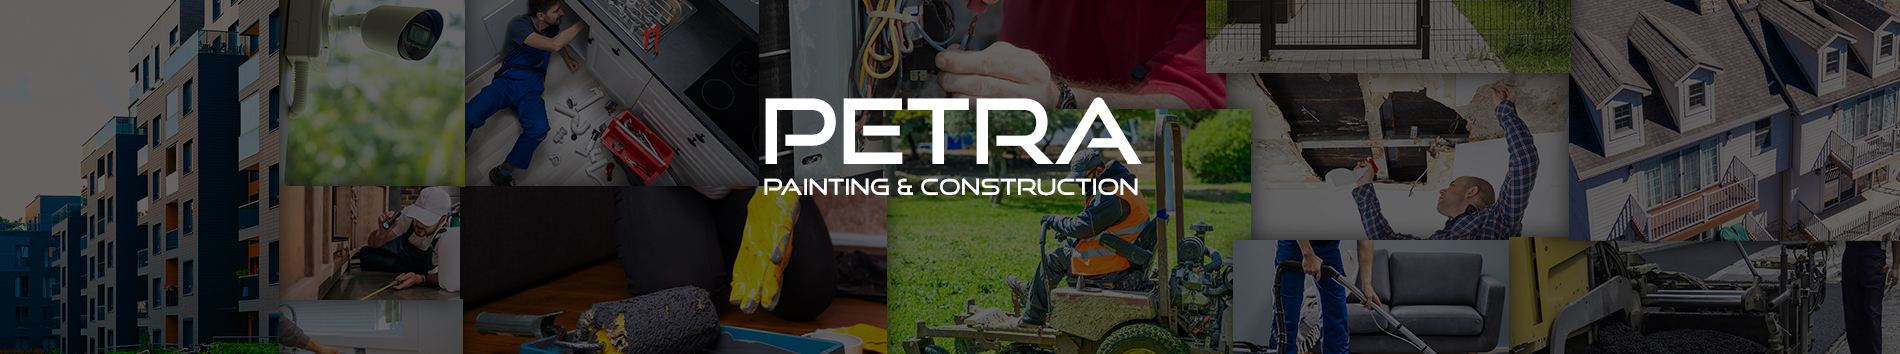 Petra Painting & Construction